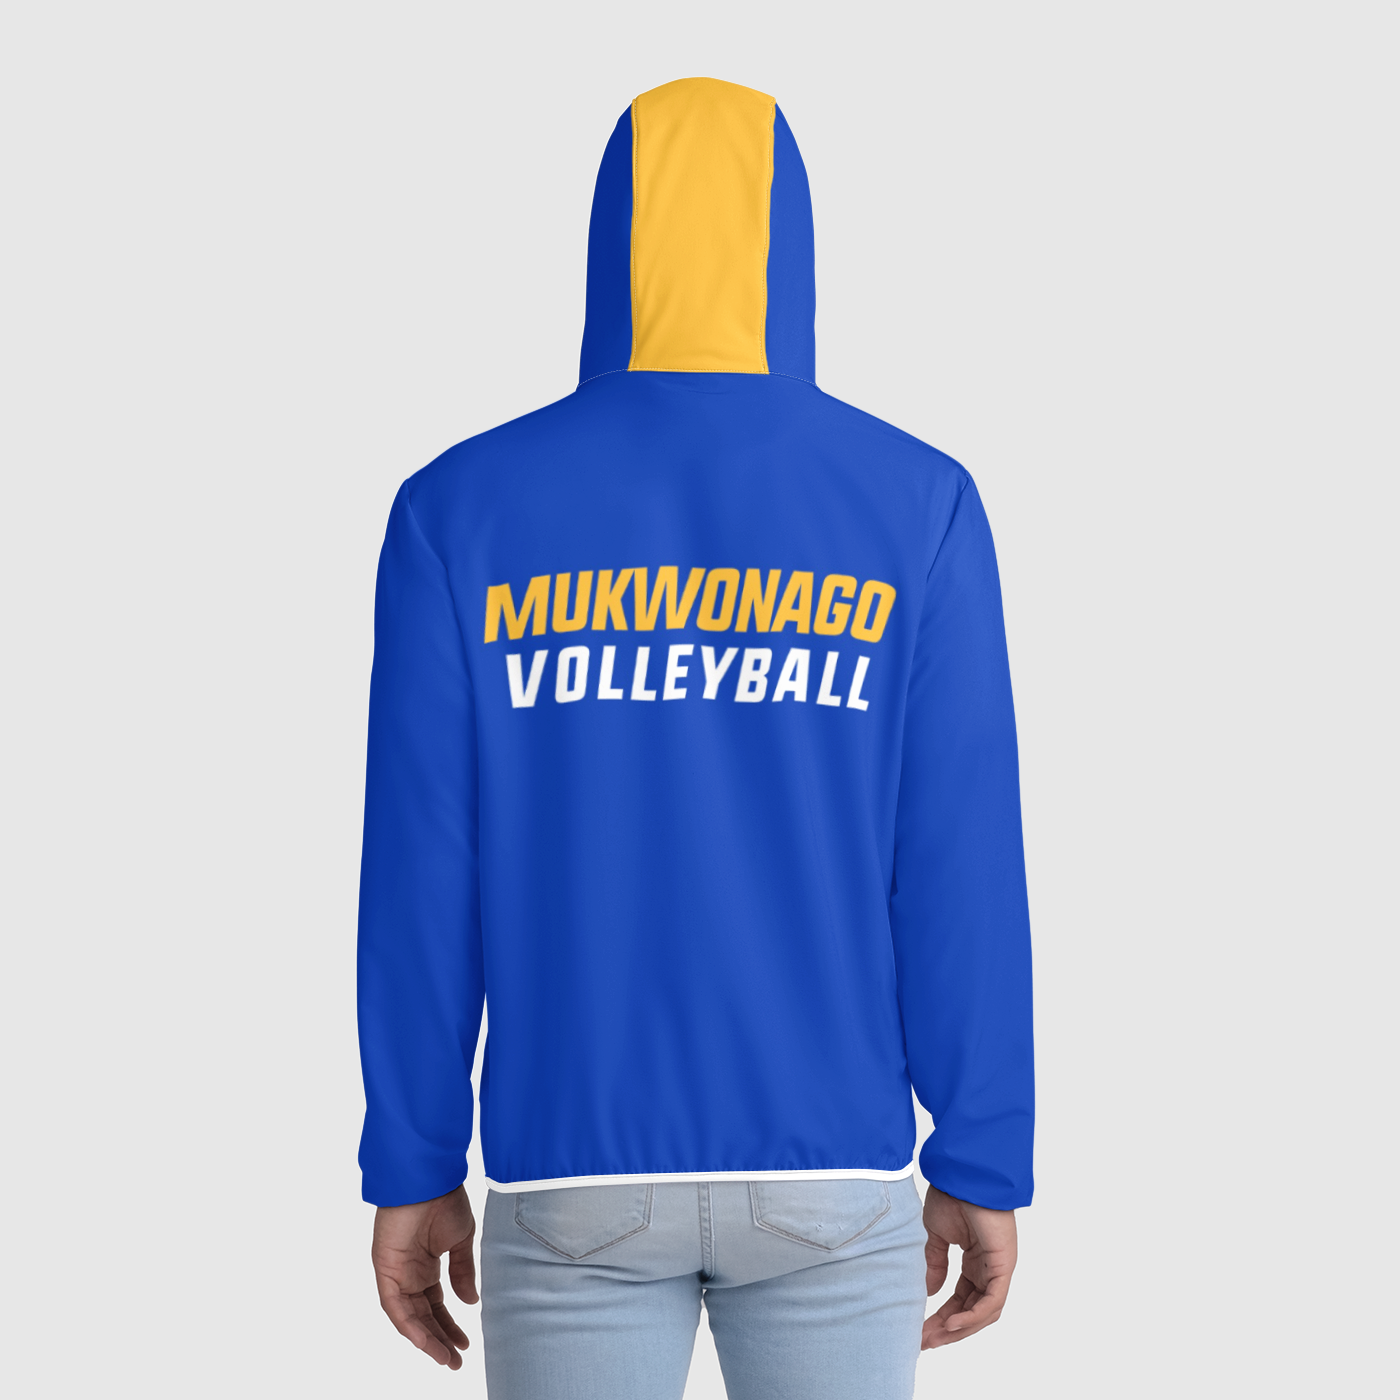 Mukwonago Volleyball Windbreaker